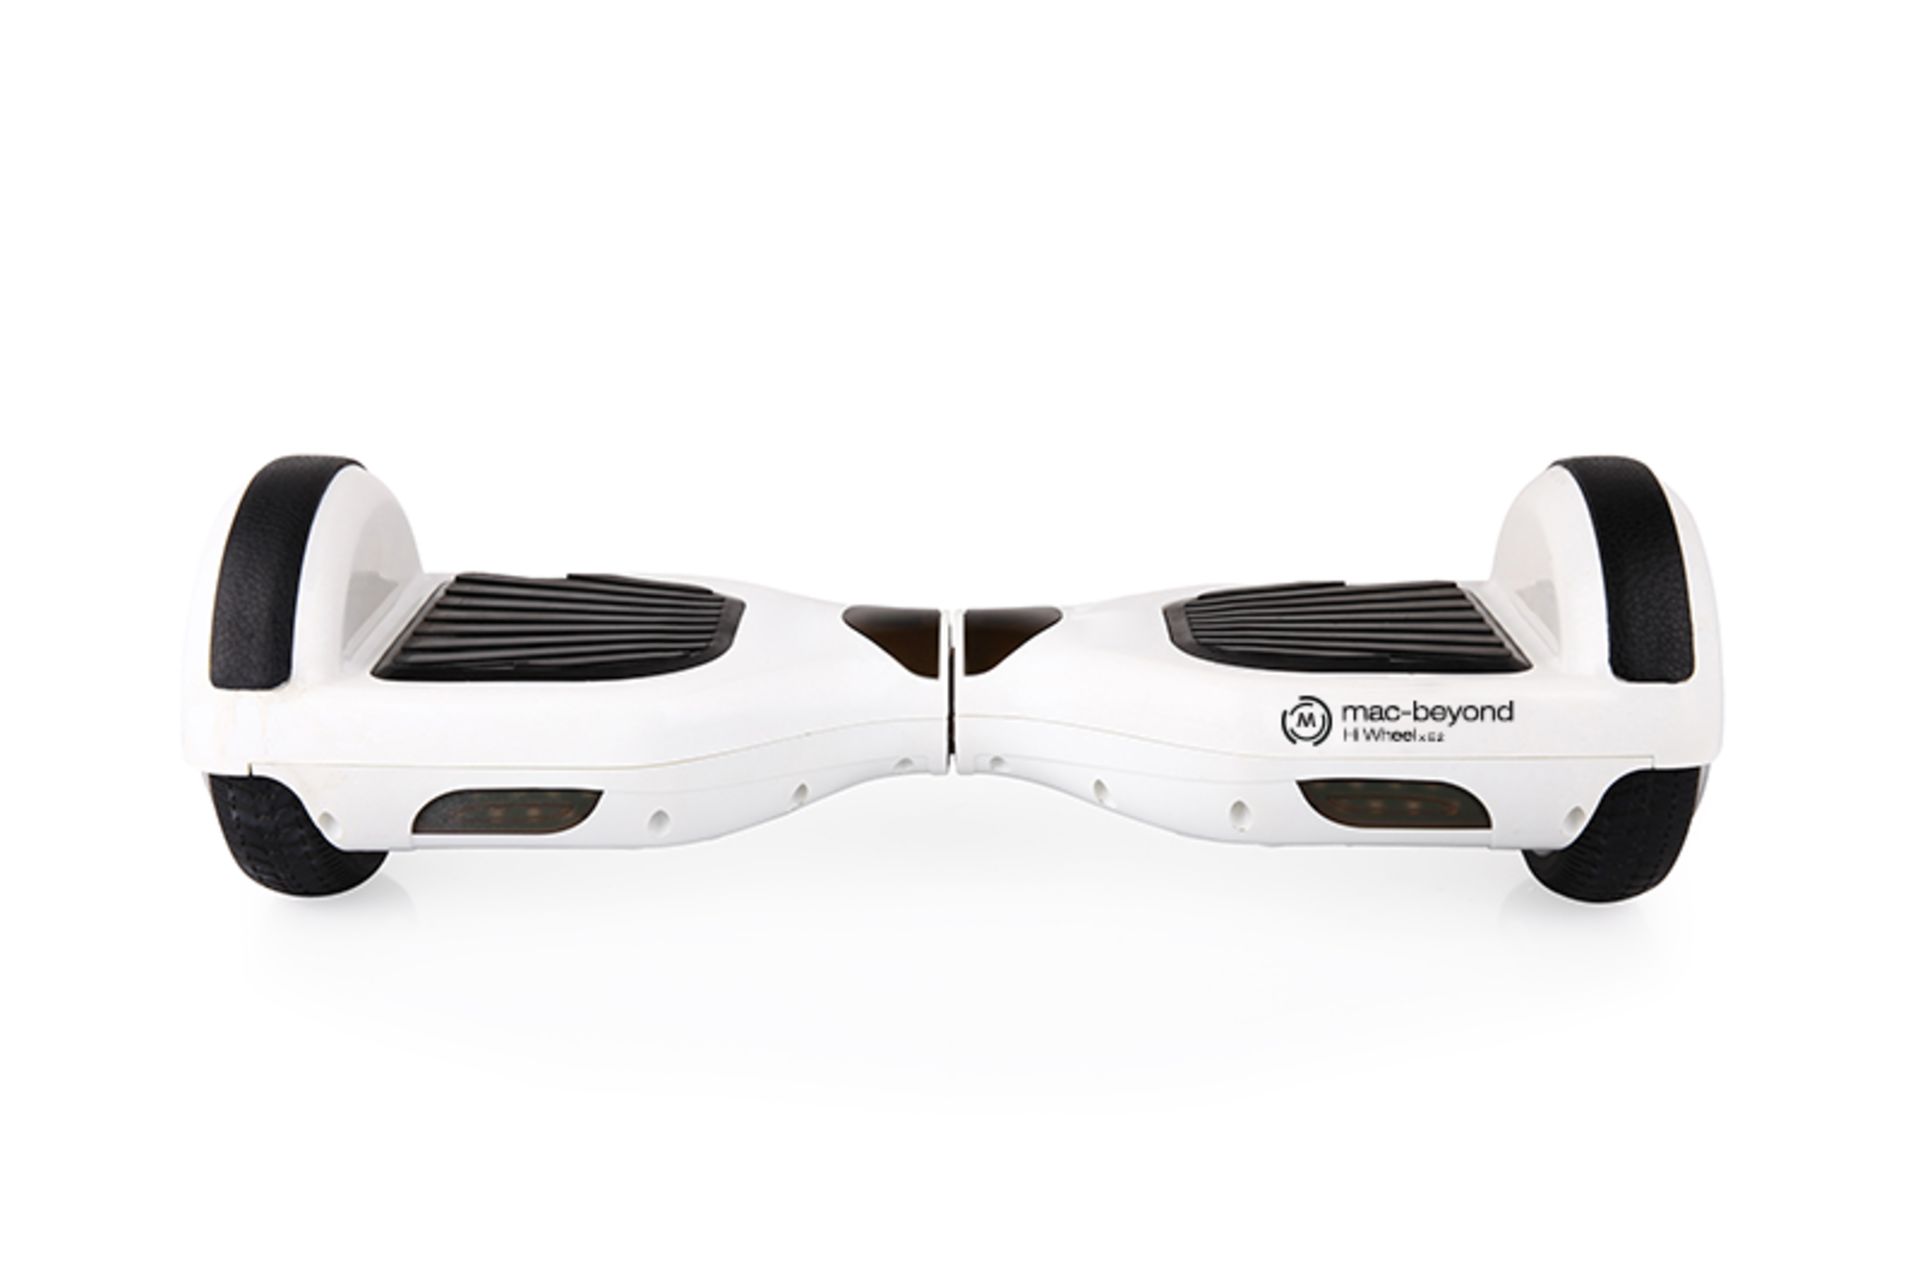 macbeyond x Hi wheel Series, White Modelæ R2 LED (6.5 inch wheels, Best Seller) Smart personal - Image 3 of 14